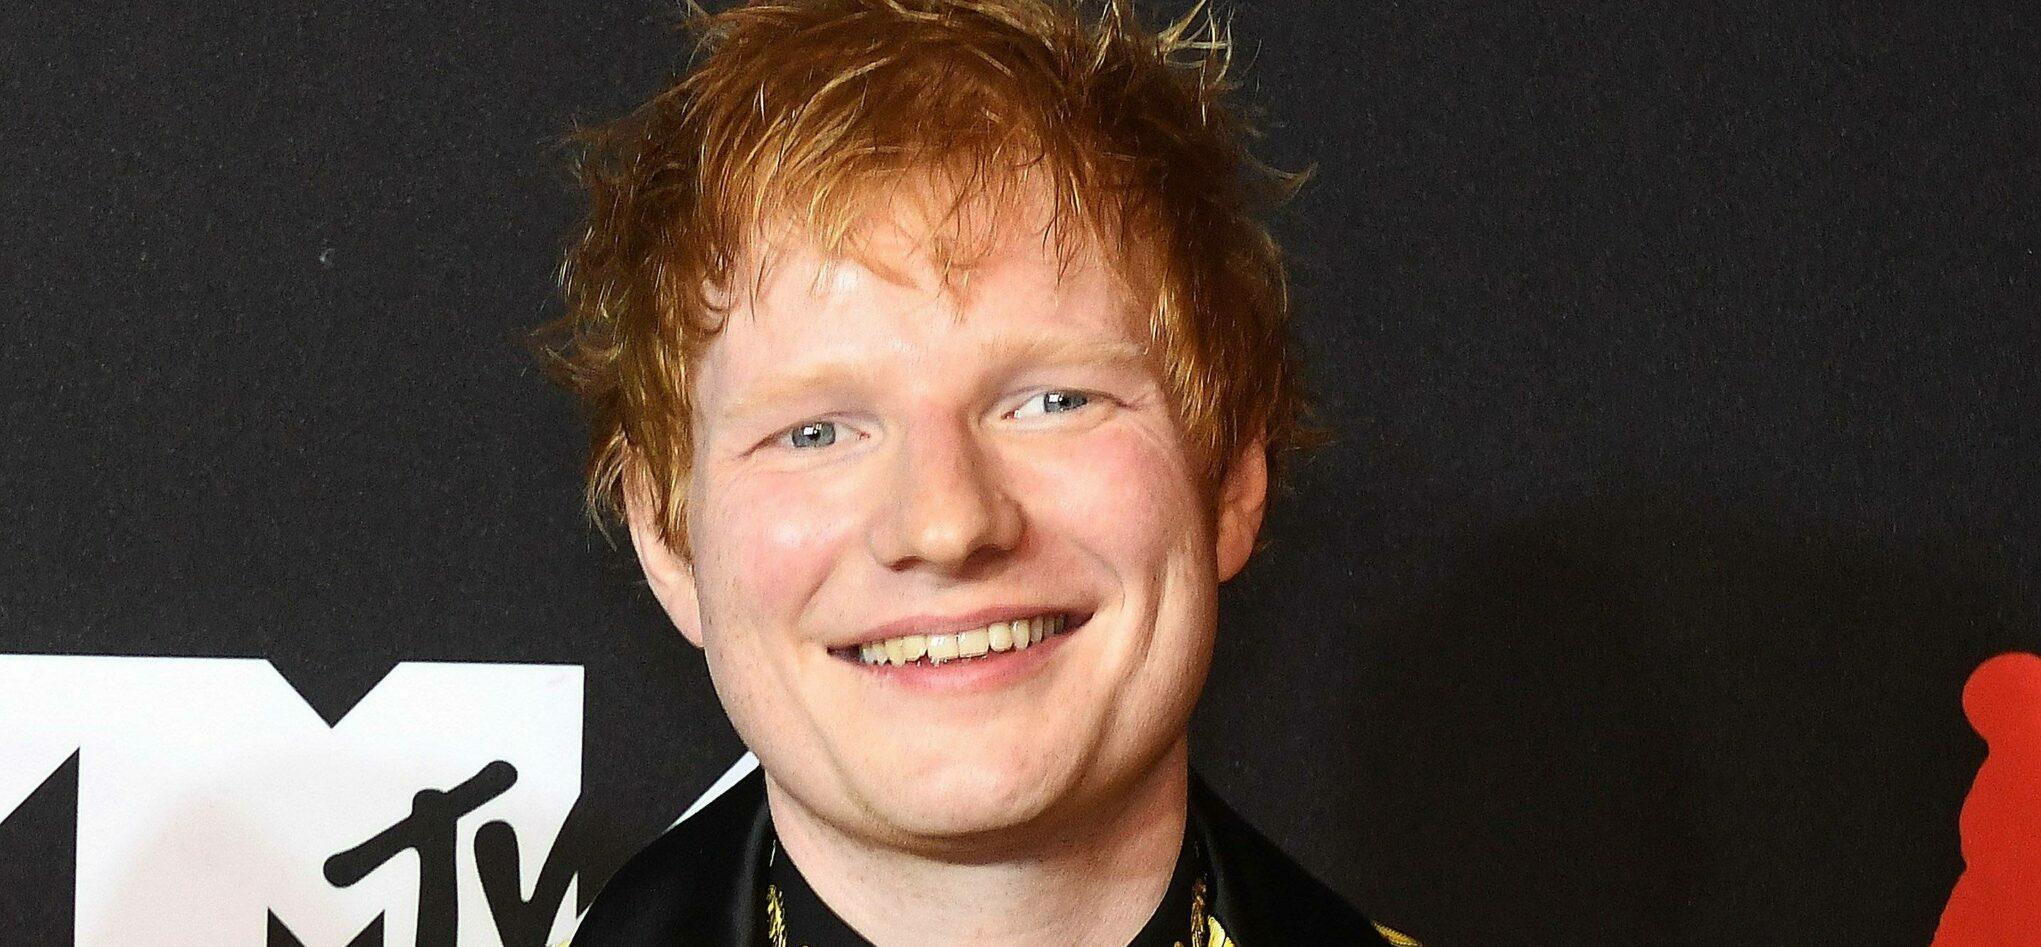 Ed Sheeran at the 2021 MTV Video Music Awards - Arrivals